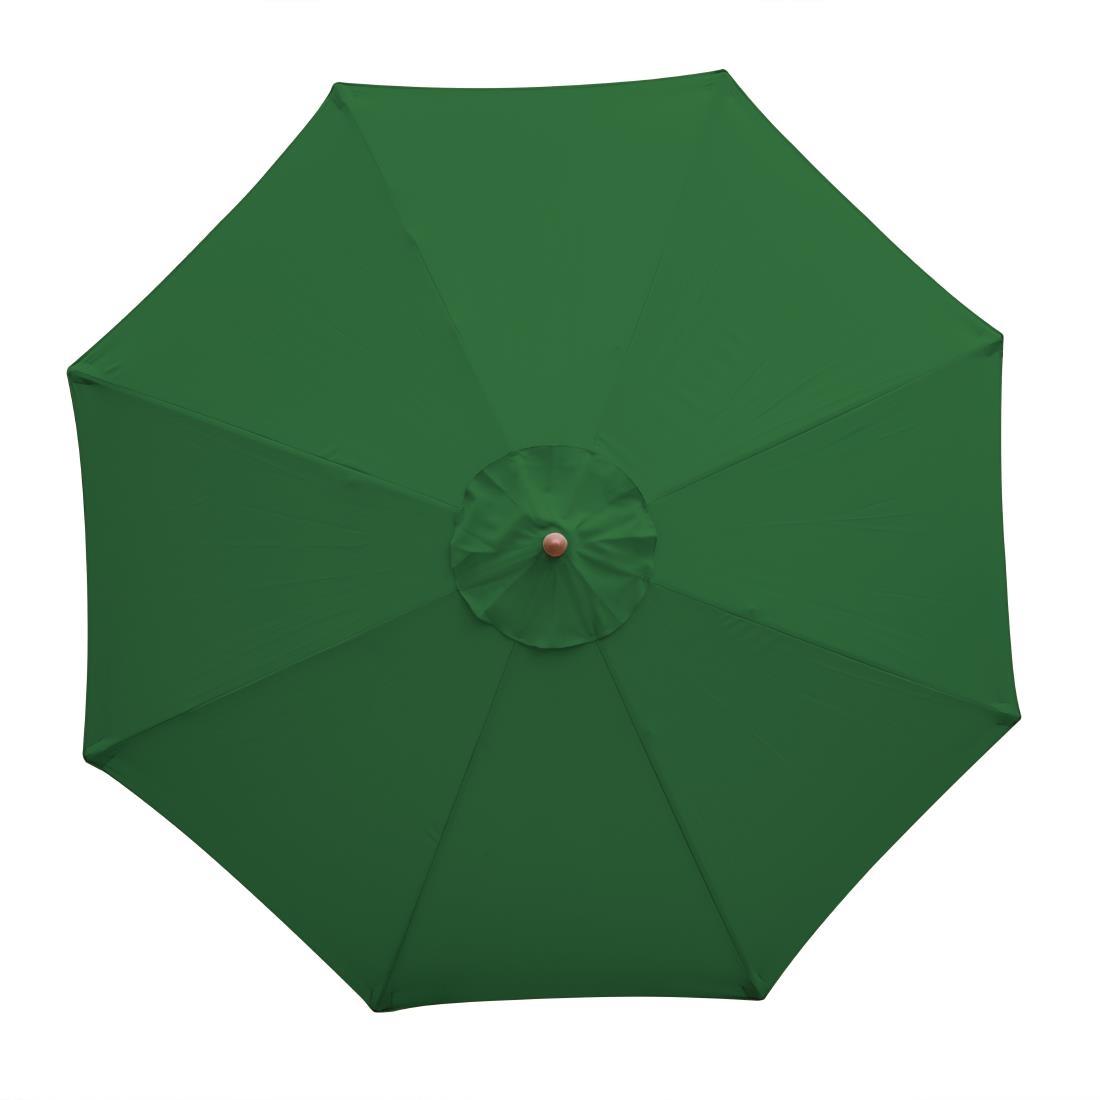 Bolero Round Parasol 2.5m Diameter Green - CB512  - 4